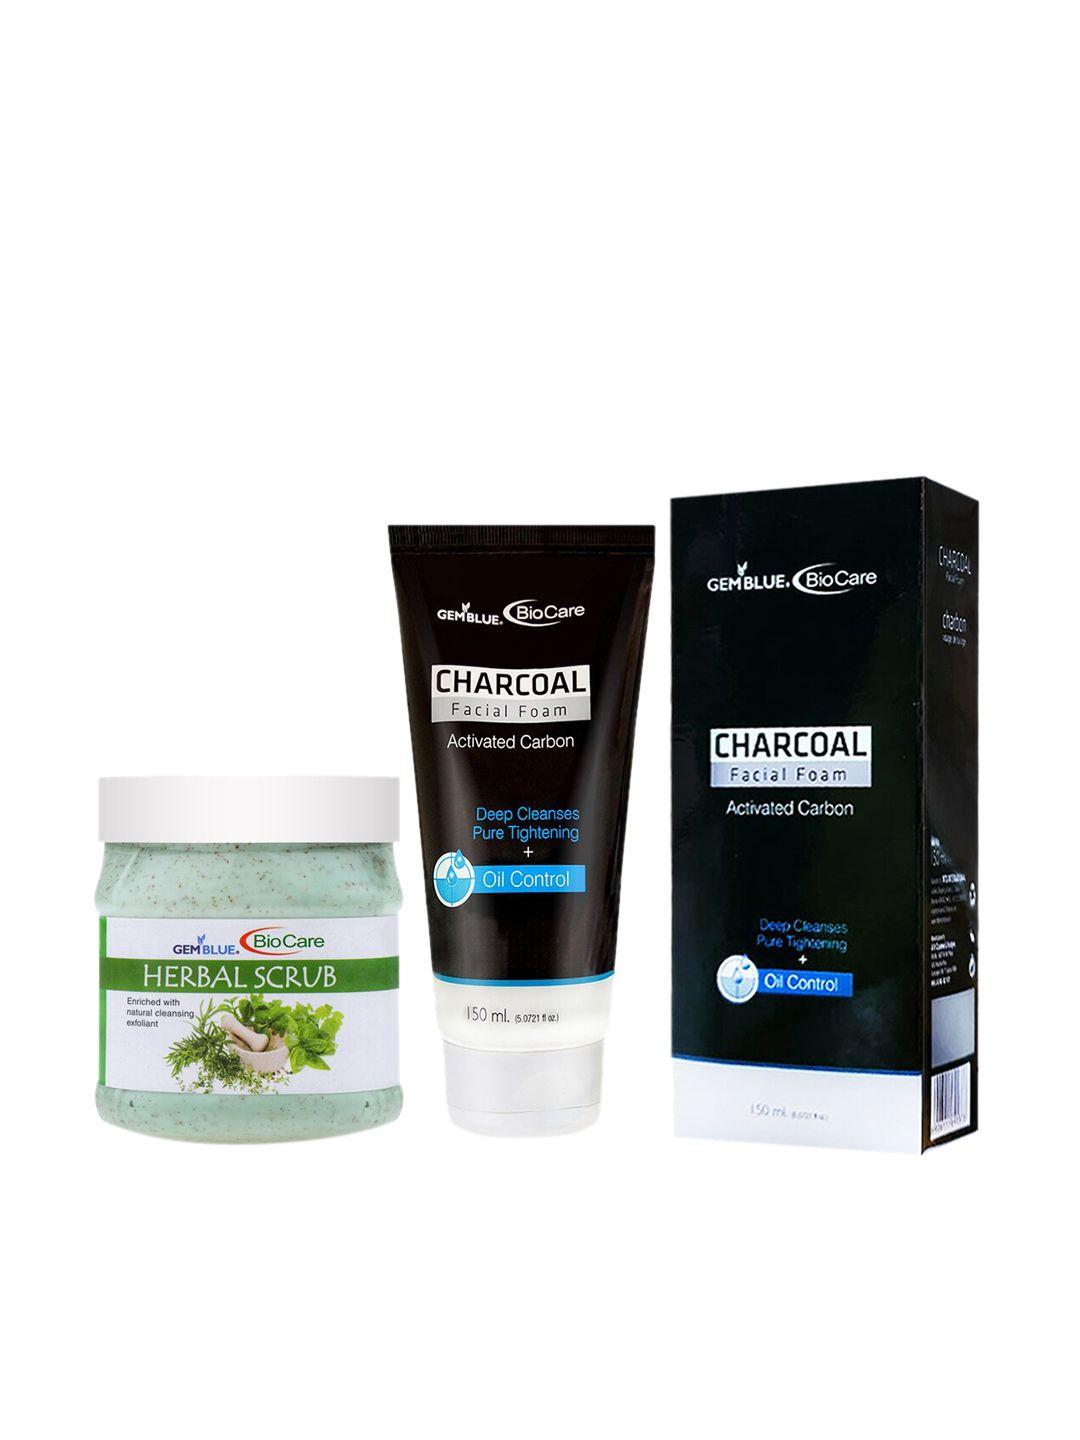 gemblue biocare herbal scrub and charcoal face wash 650ml